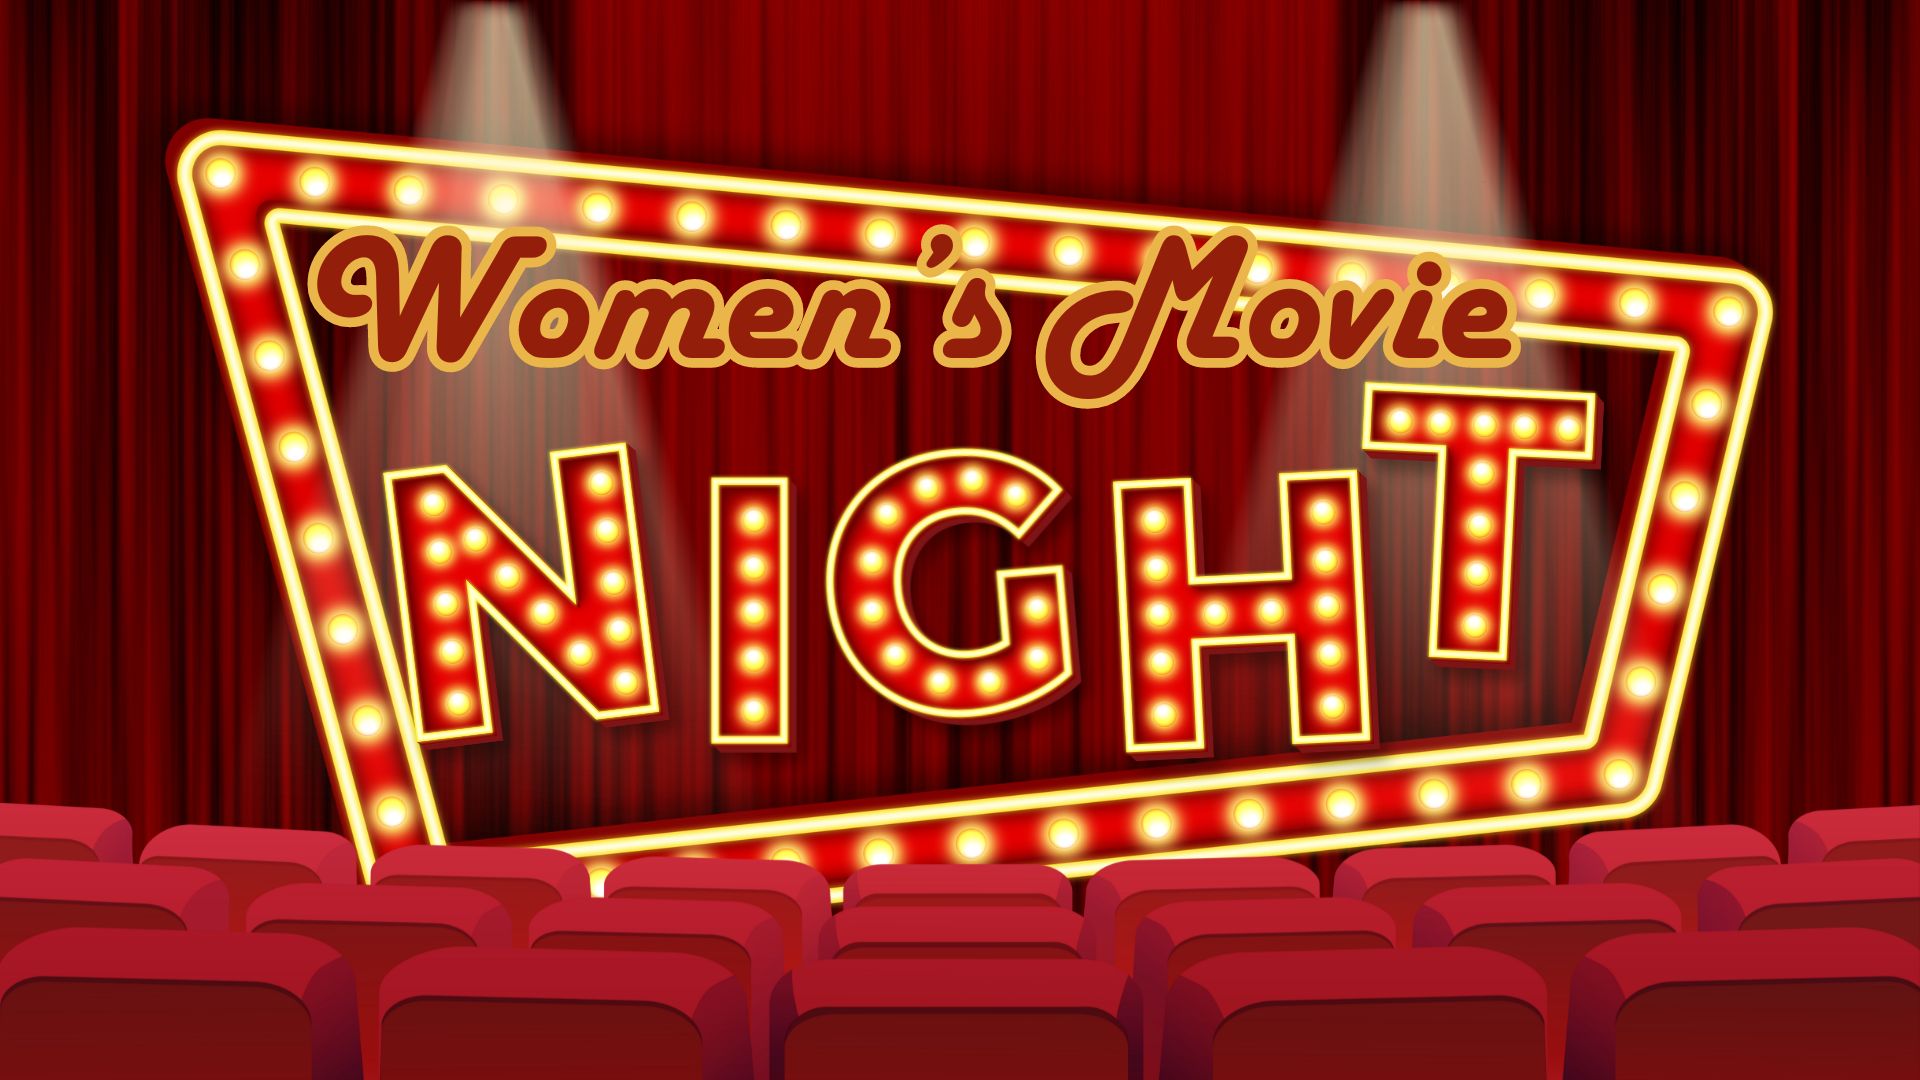 Women’s Movie night image